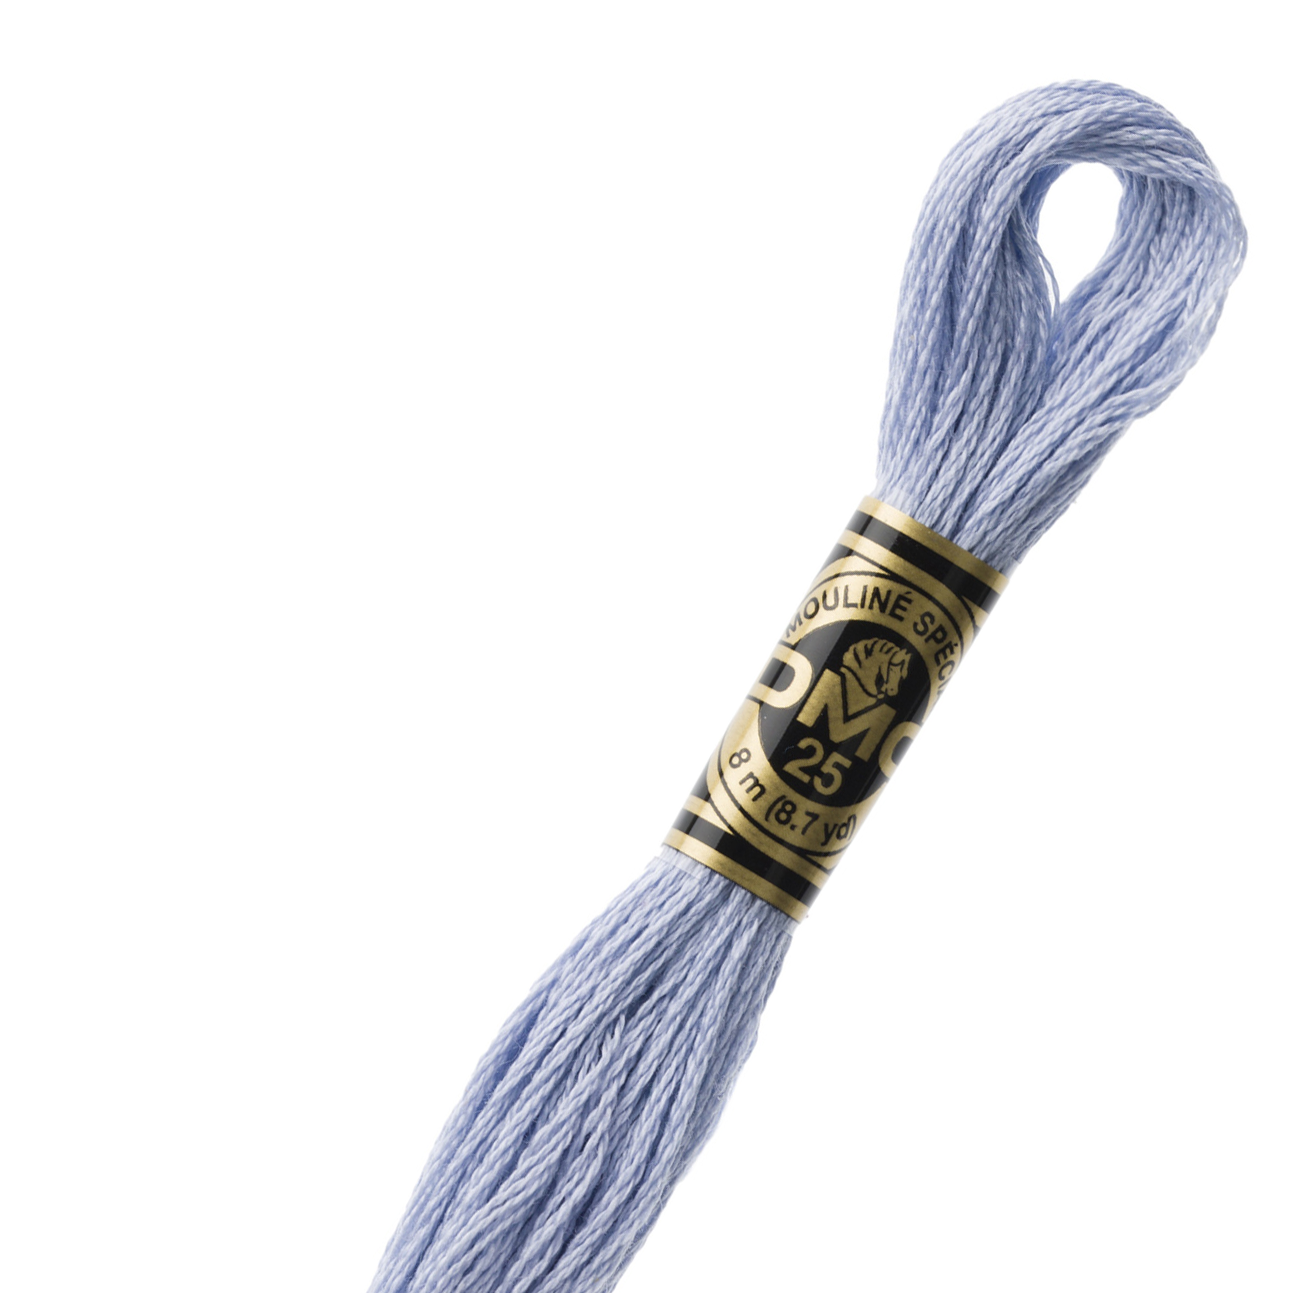 AmoHilos 250 Different Selected DMC Colors Set Mercerized Egyptian Long  Fiber Cotton Embroidery Floss Cross Stitch Thread 8 Mts